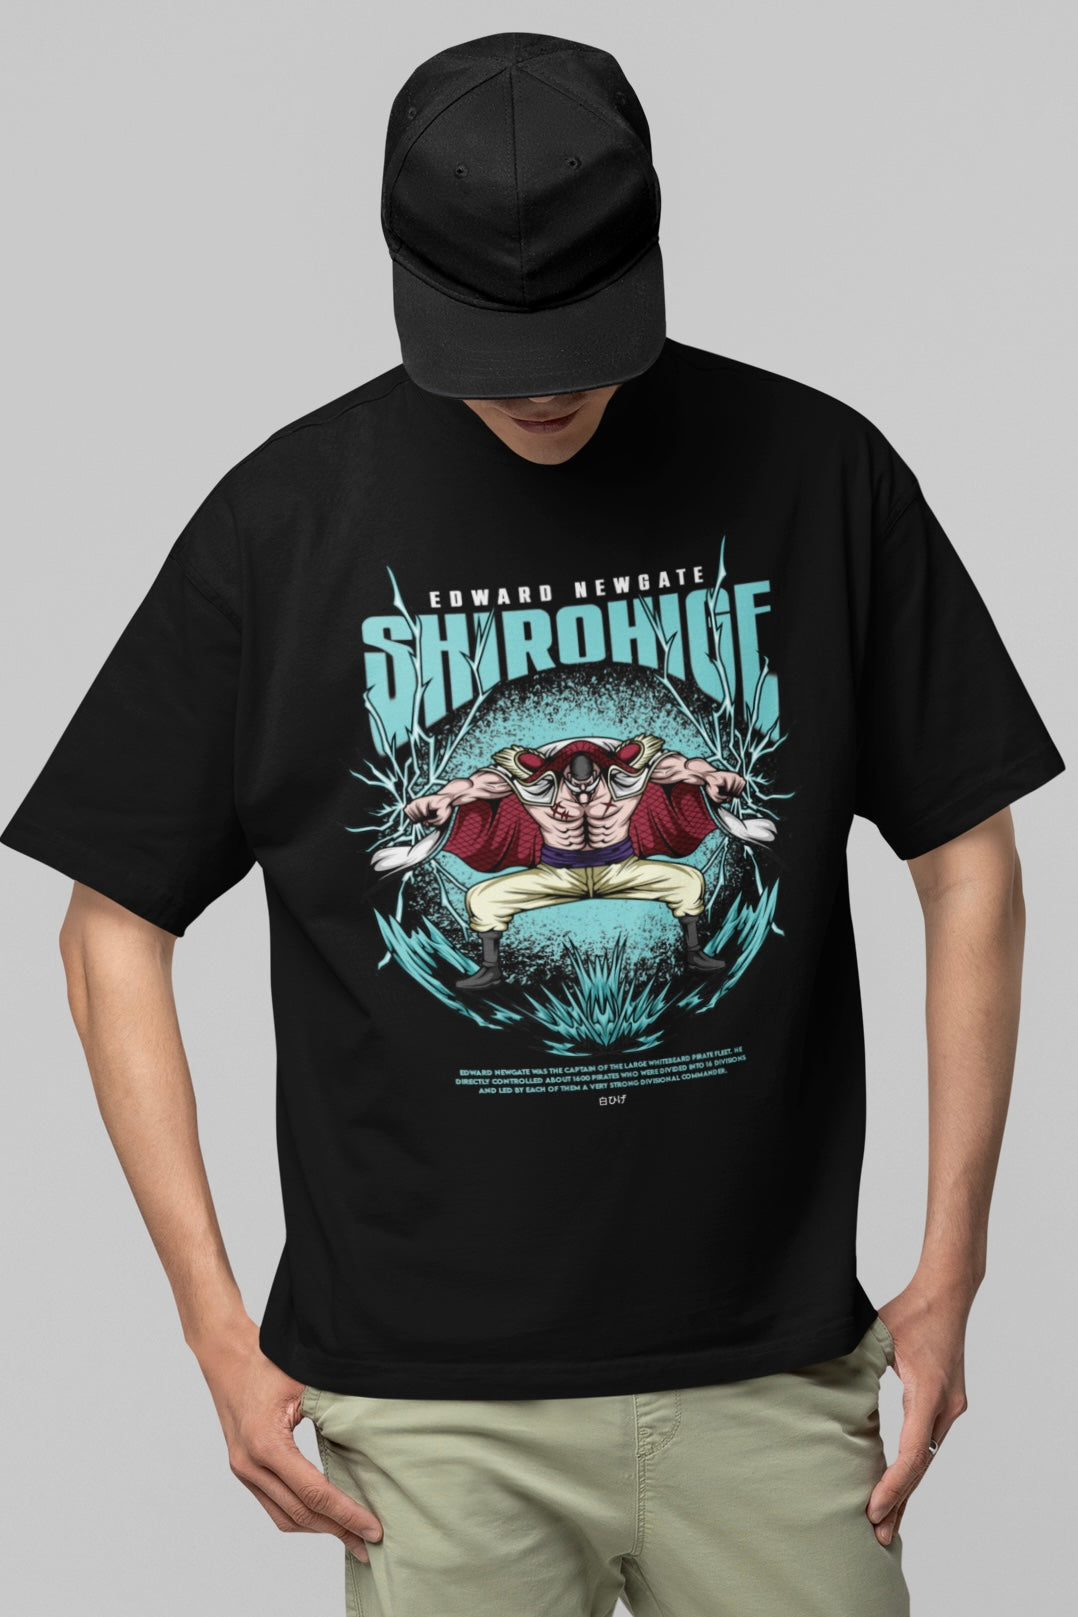 Edward Newgate Shirohige (One Piece) Unisex Oversized T-shirt